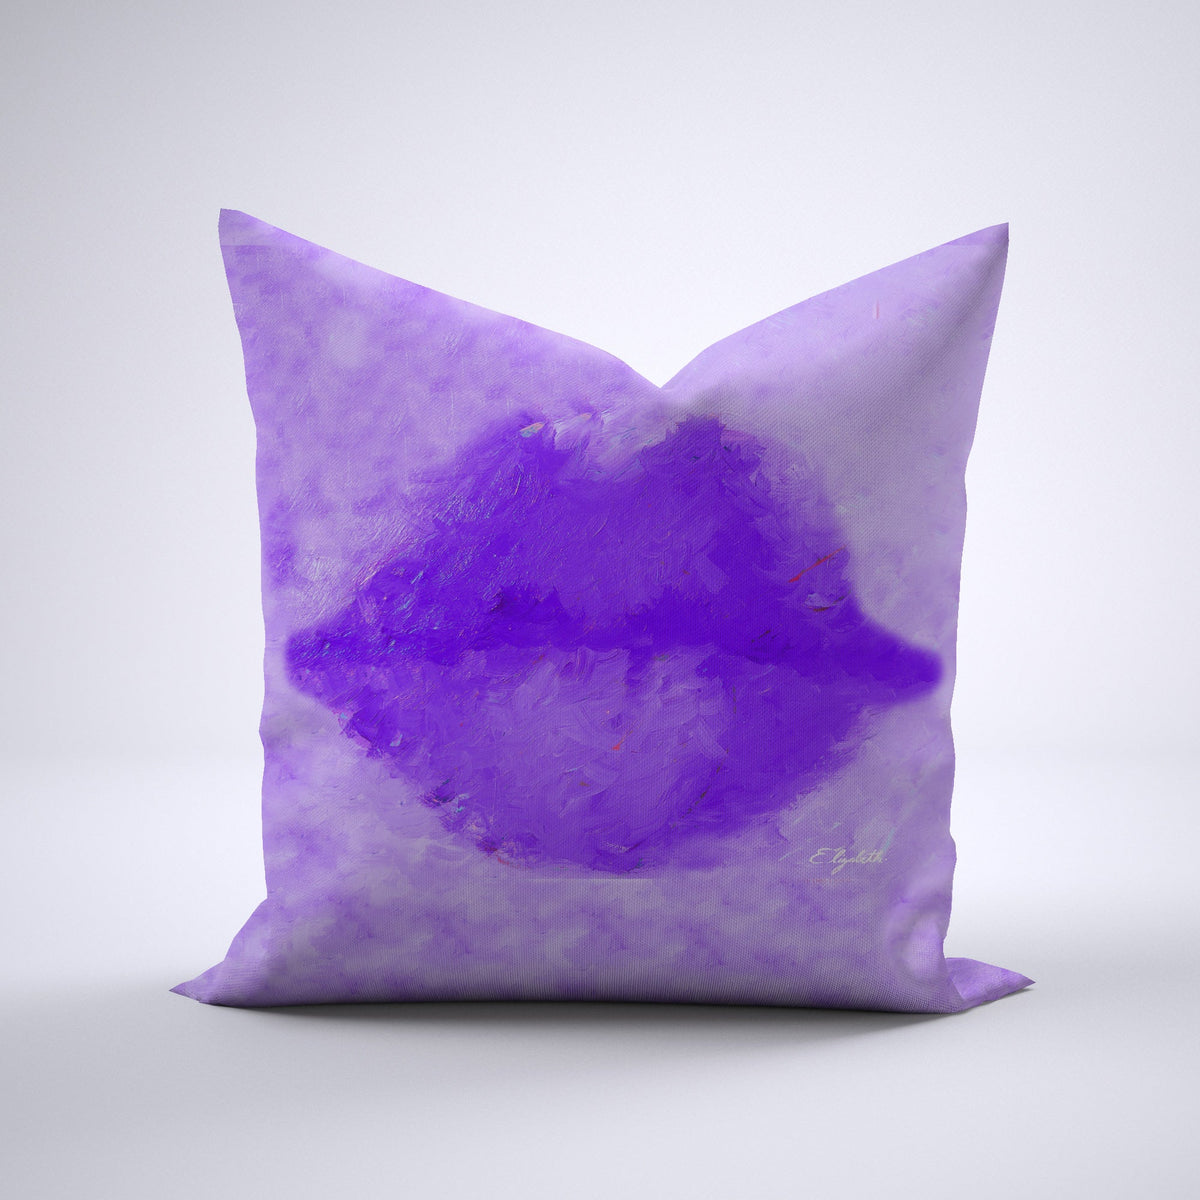 Throw Pillow - Pucker Lips Lavender Bedding Collections, Pillows, Throw Pillows MWW 